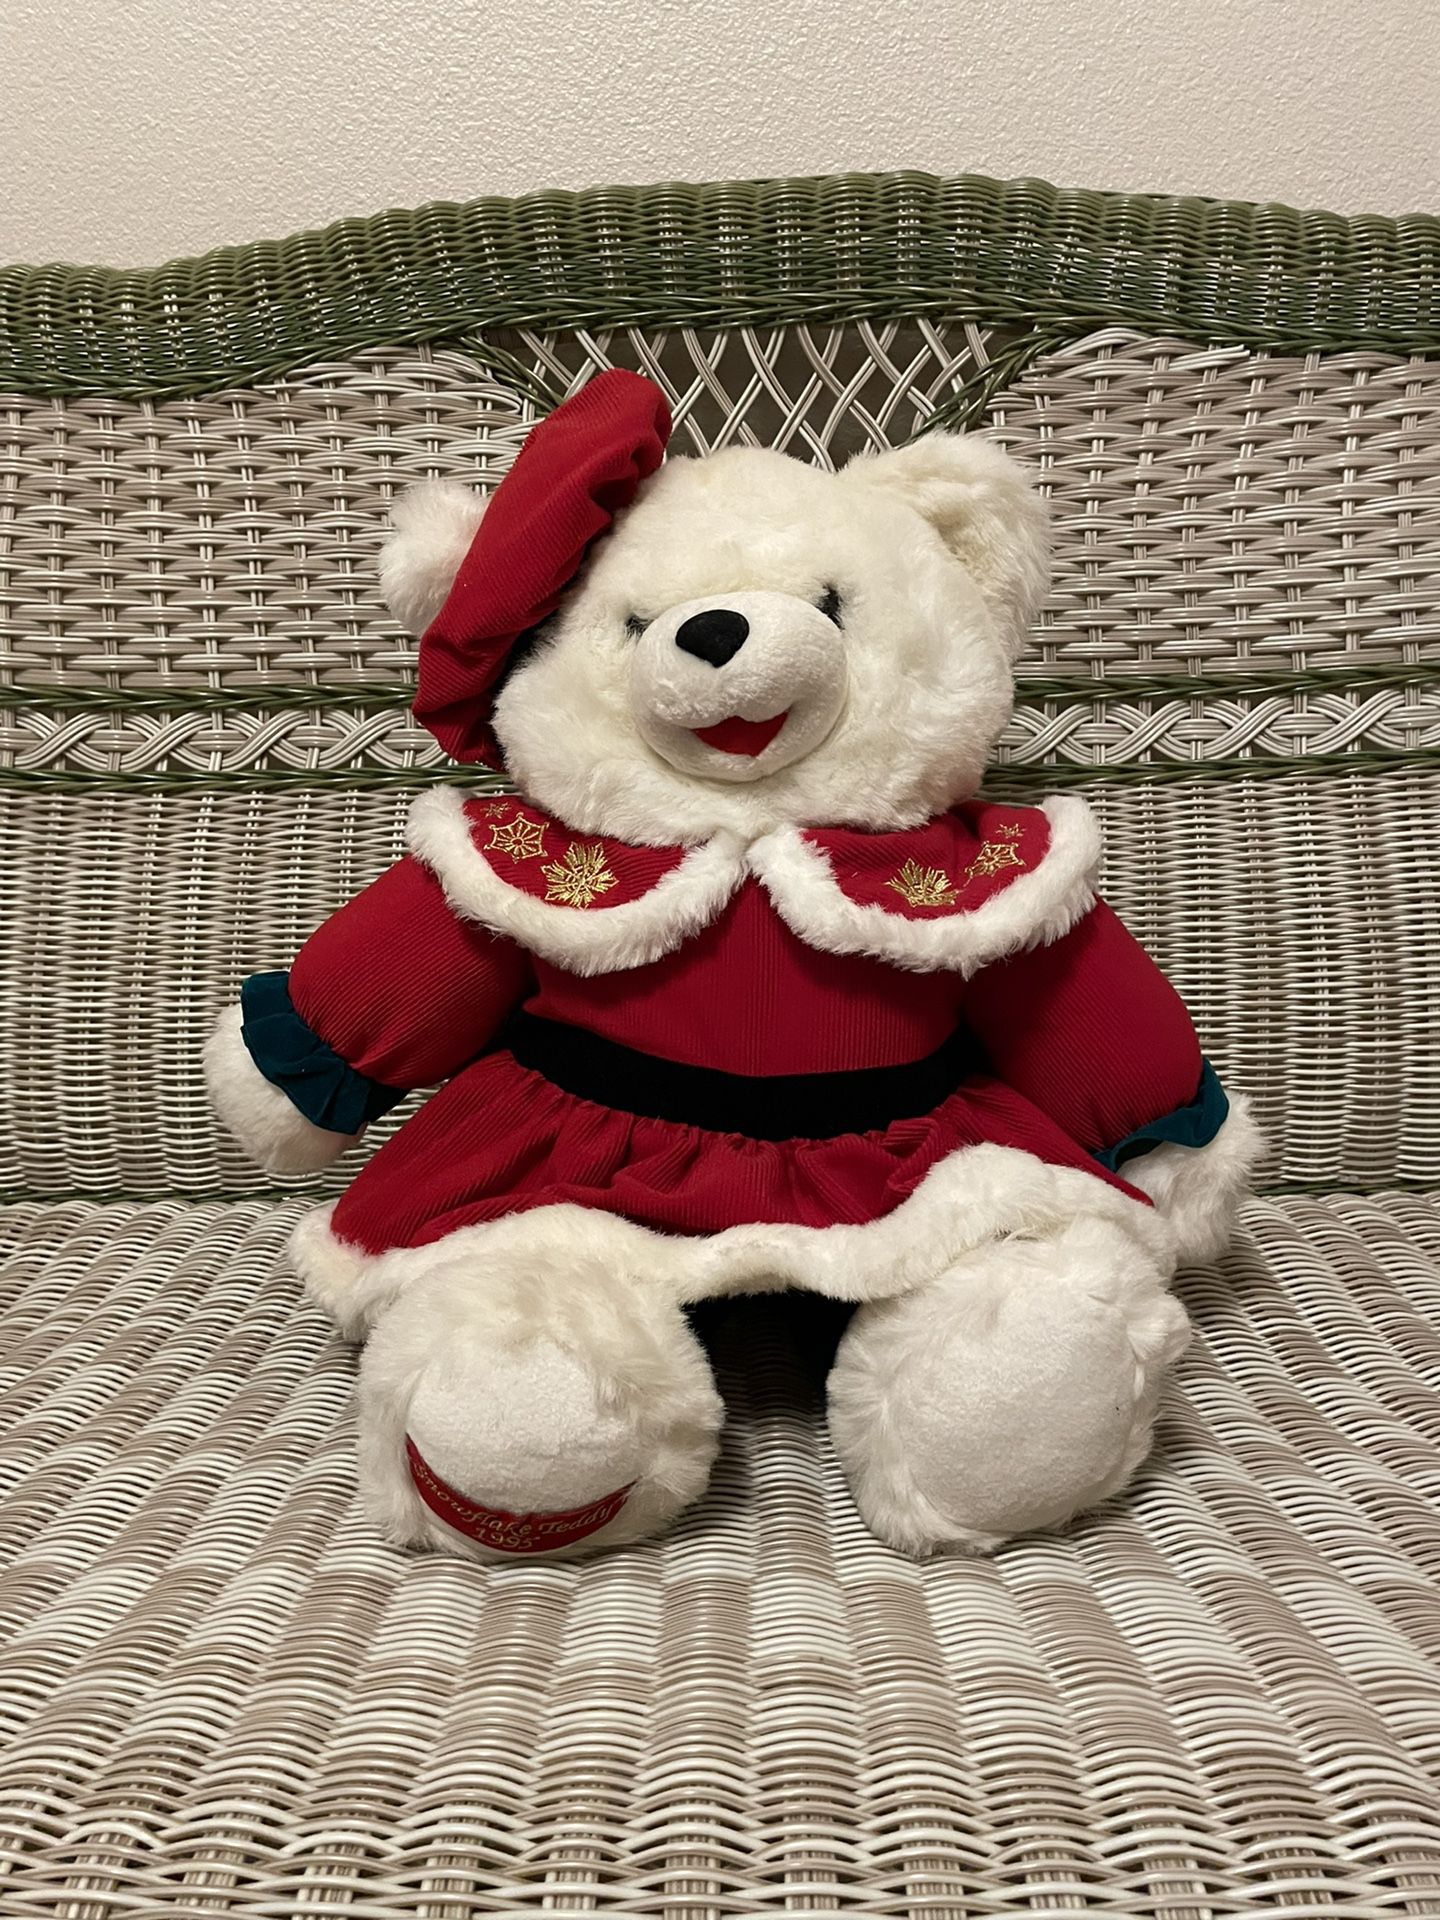 Classic 1995 Wal-Mart Christmas Teddy Bear